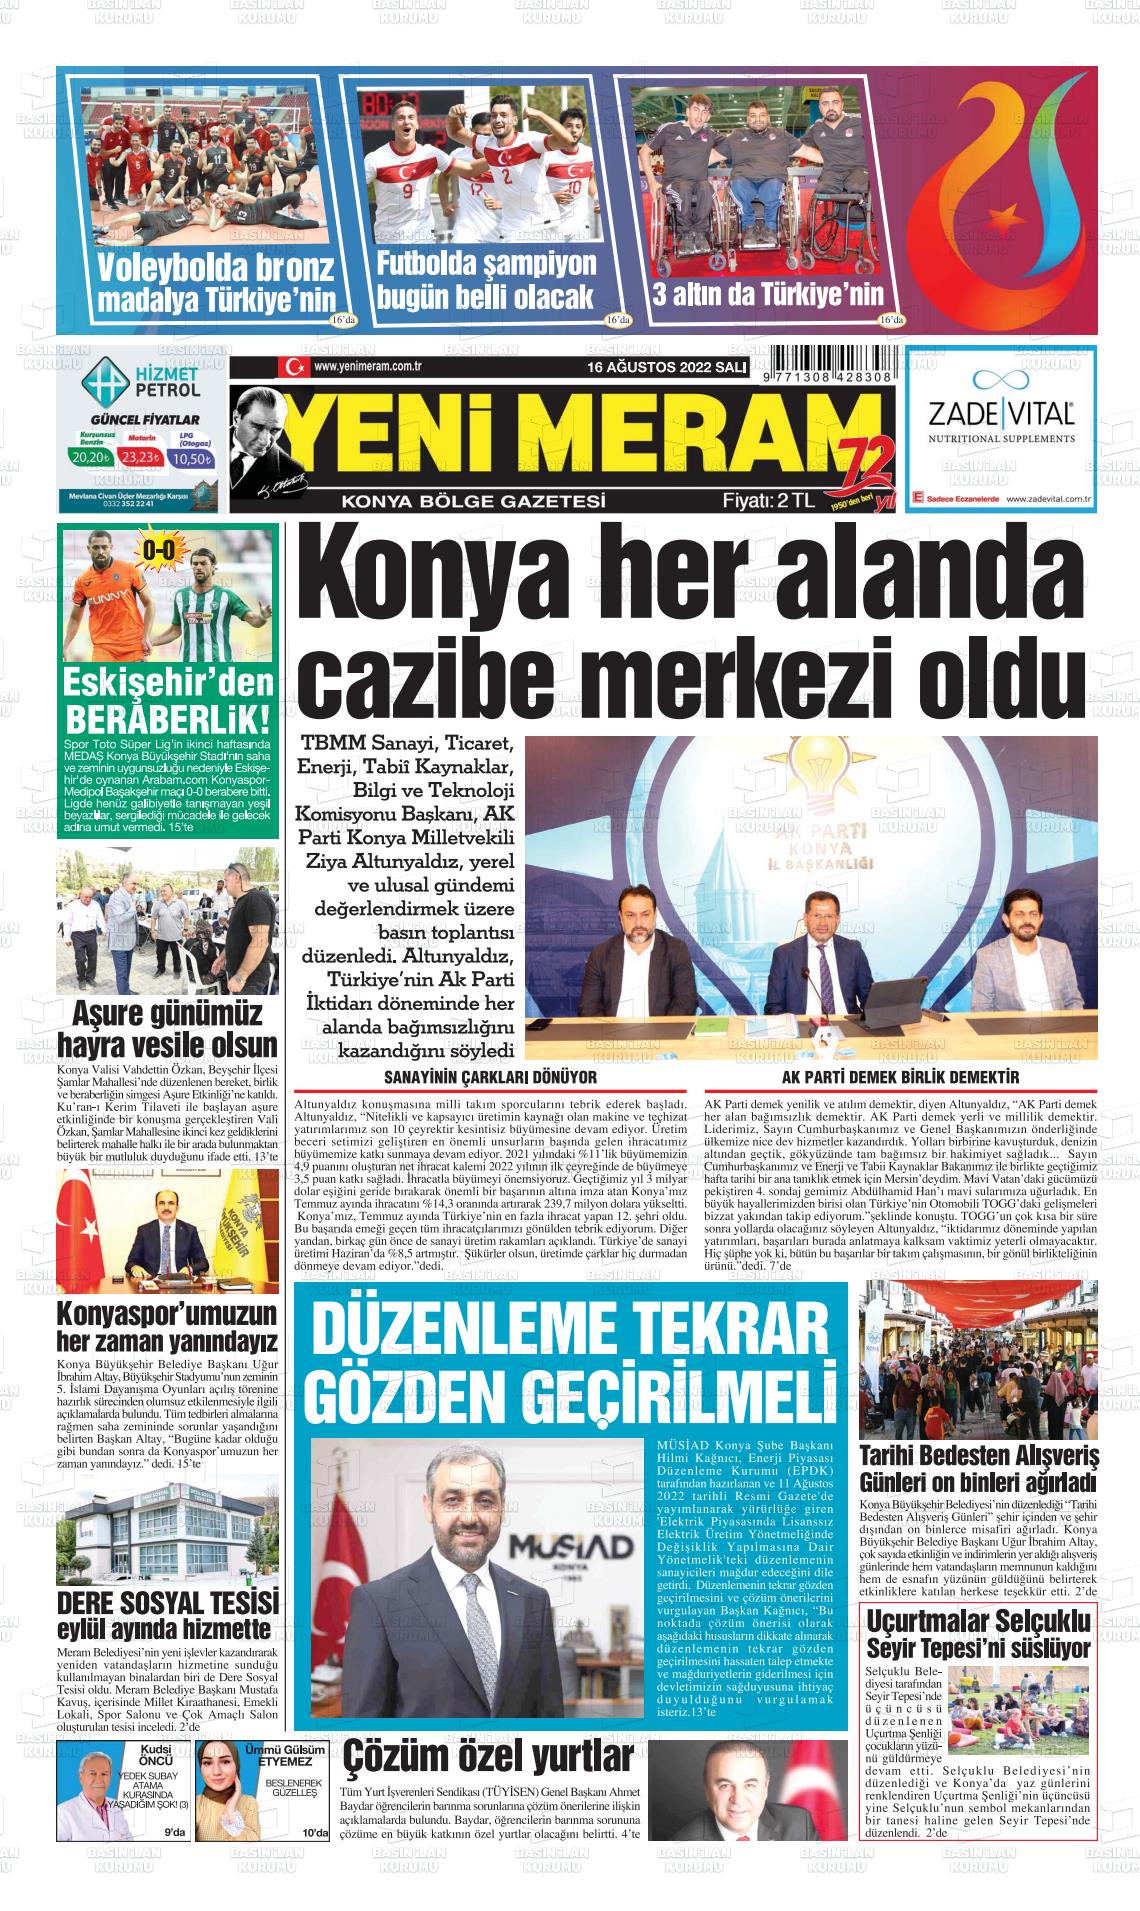 16 Ağustos 2022 Yeni Meram Gazete Manşeti